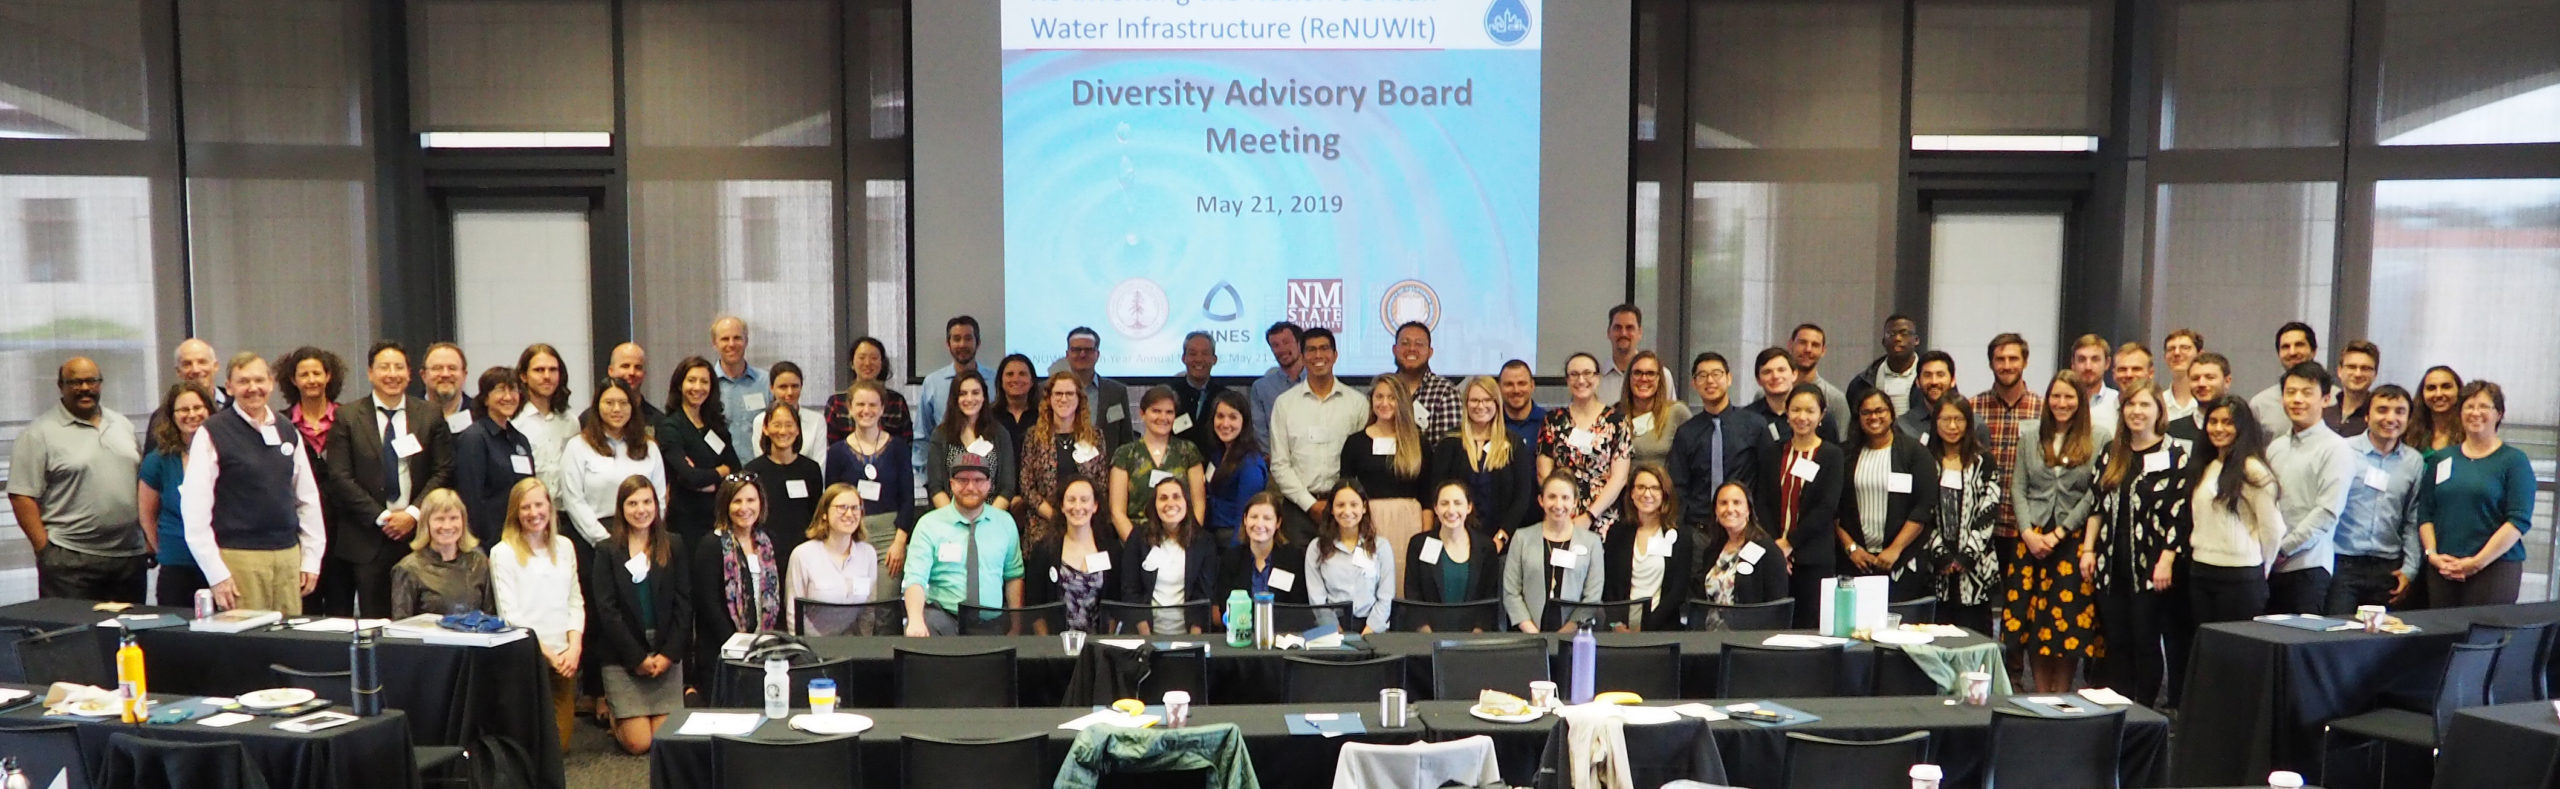 Diversity Advisory Board at the 2019 ReNUWIt Annual Meeting